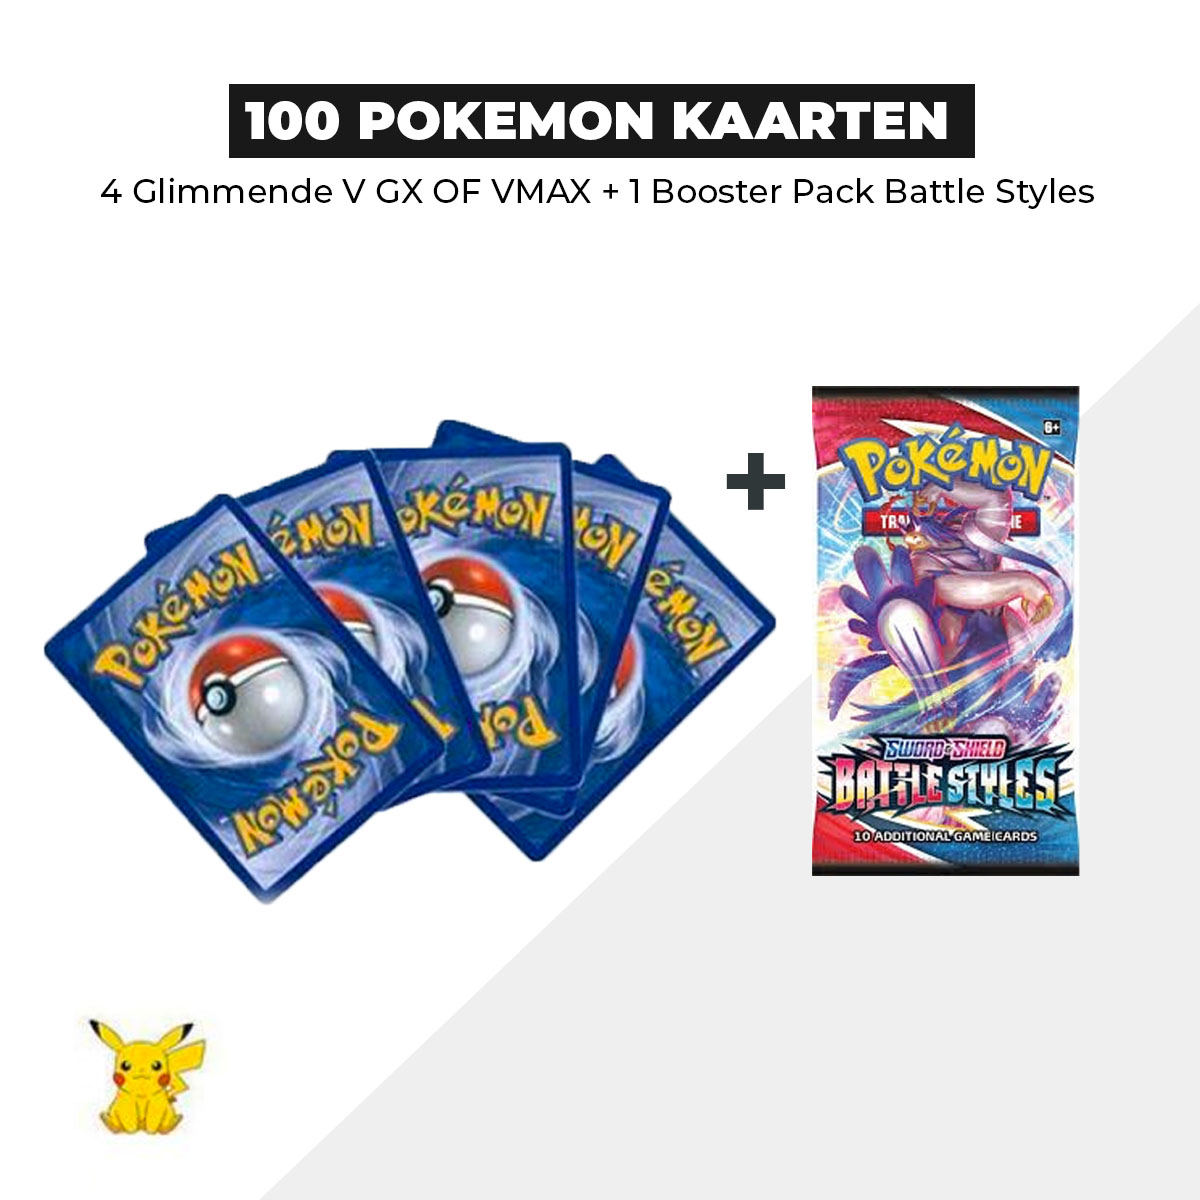 Roos Componist voedsel 100 Pokémon Kaarten Bundel + 1 Battle Styles Booster pack - Pokemon Bundel